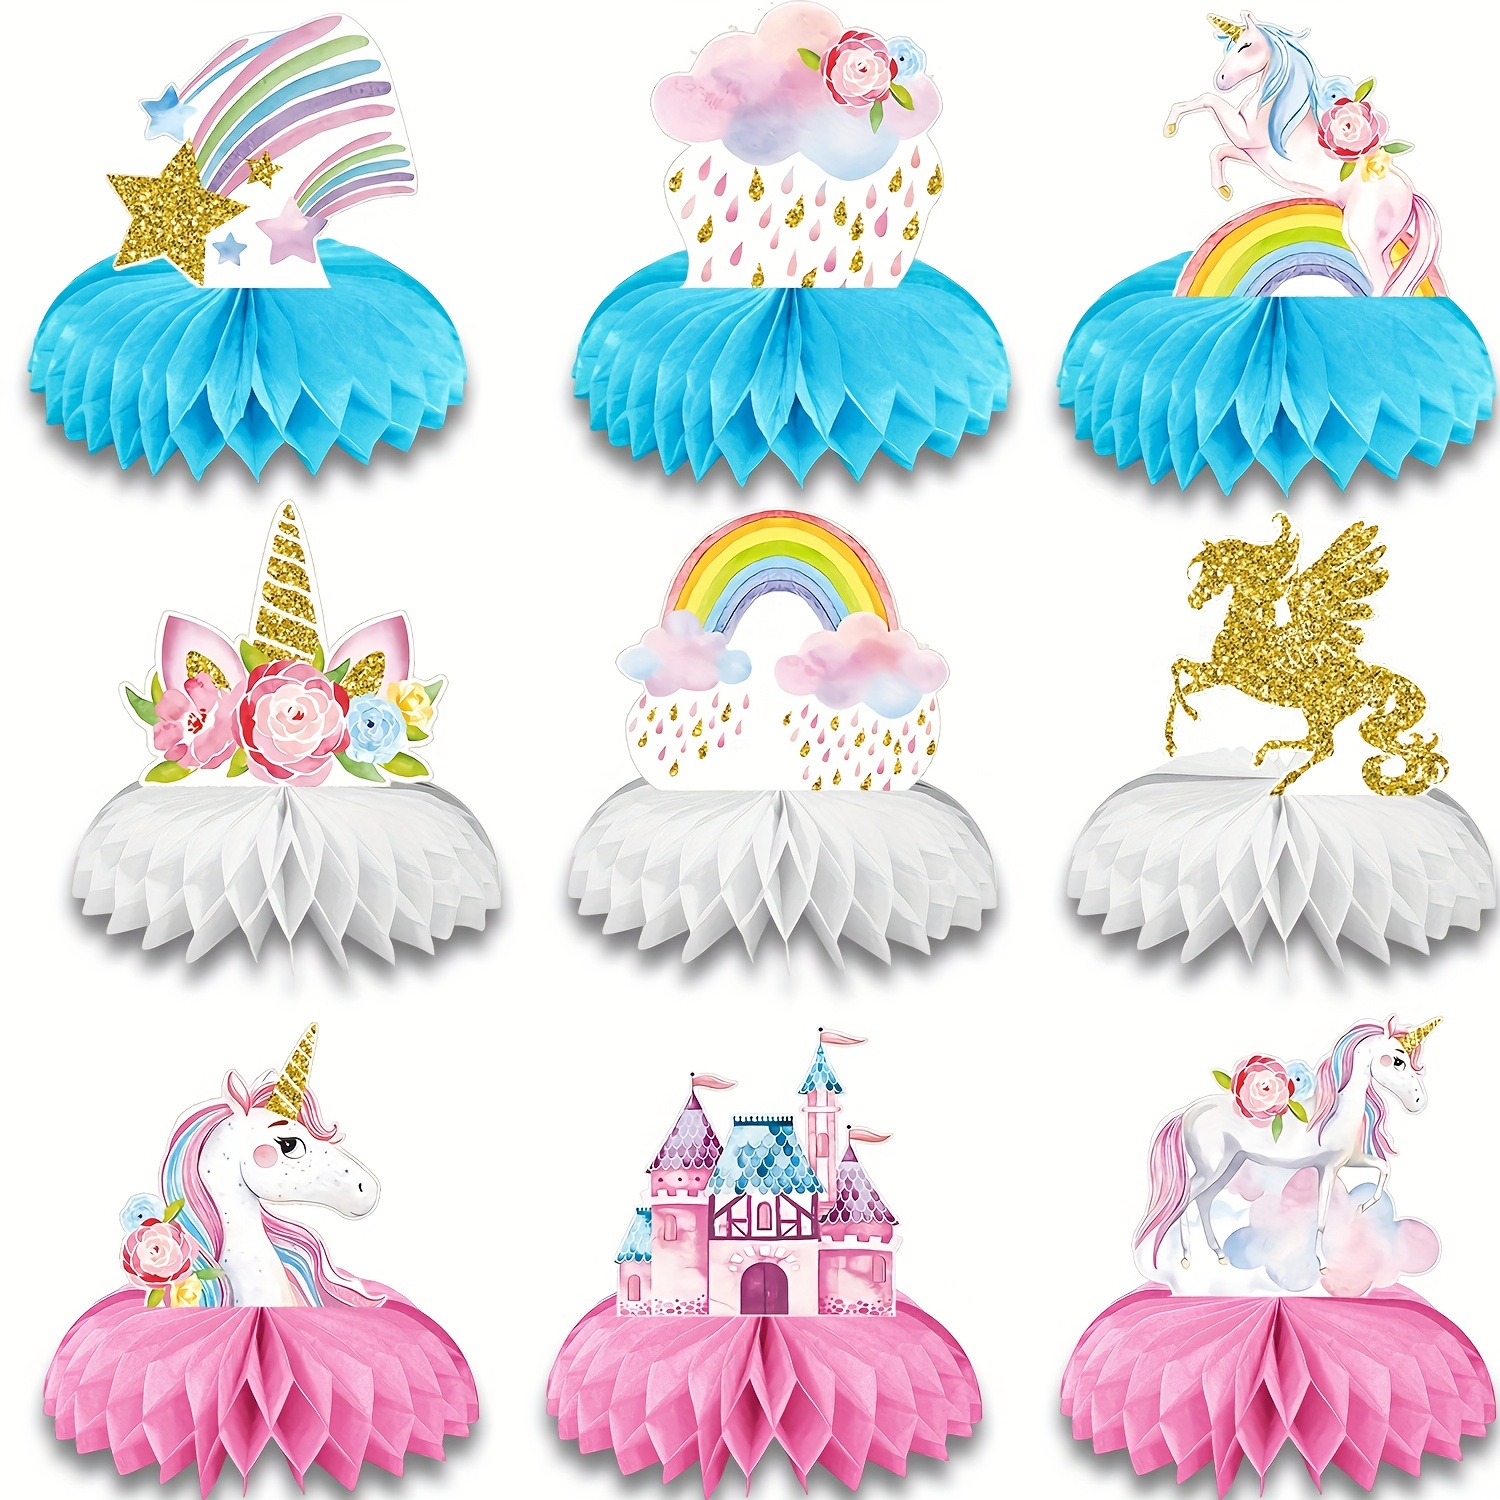 Unicorn Cupcake Topper - 35PCS Rainbow Unicorn Party Decorations